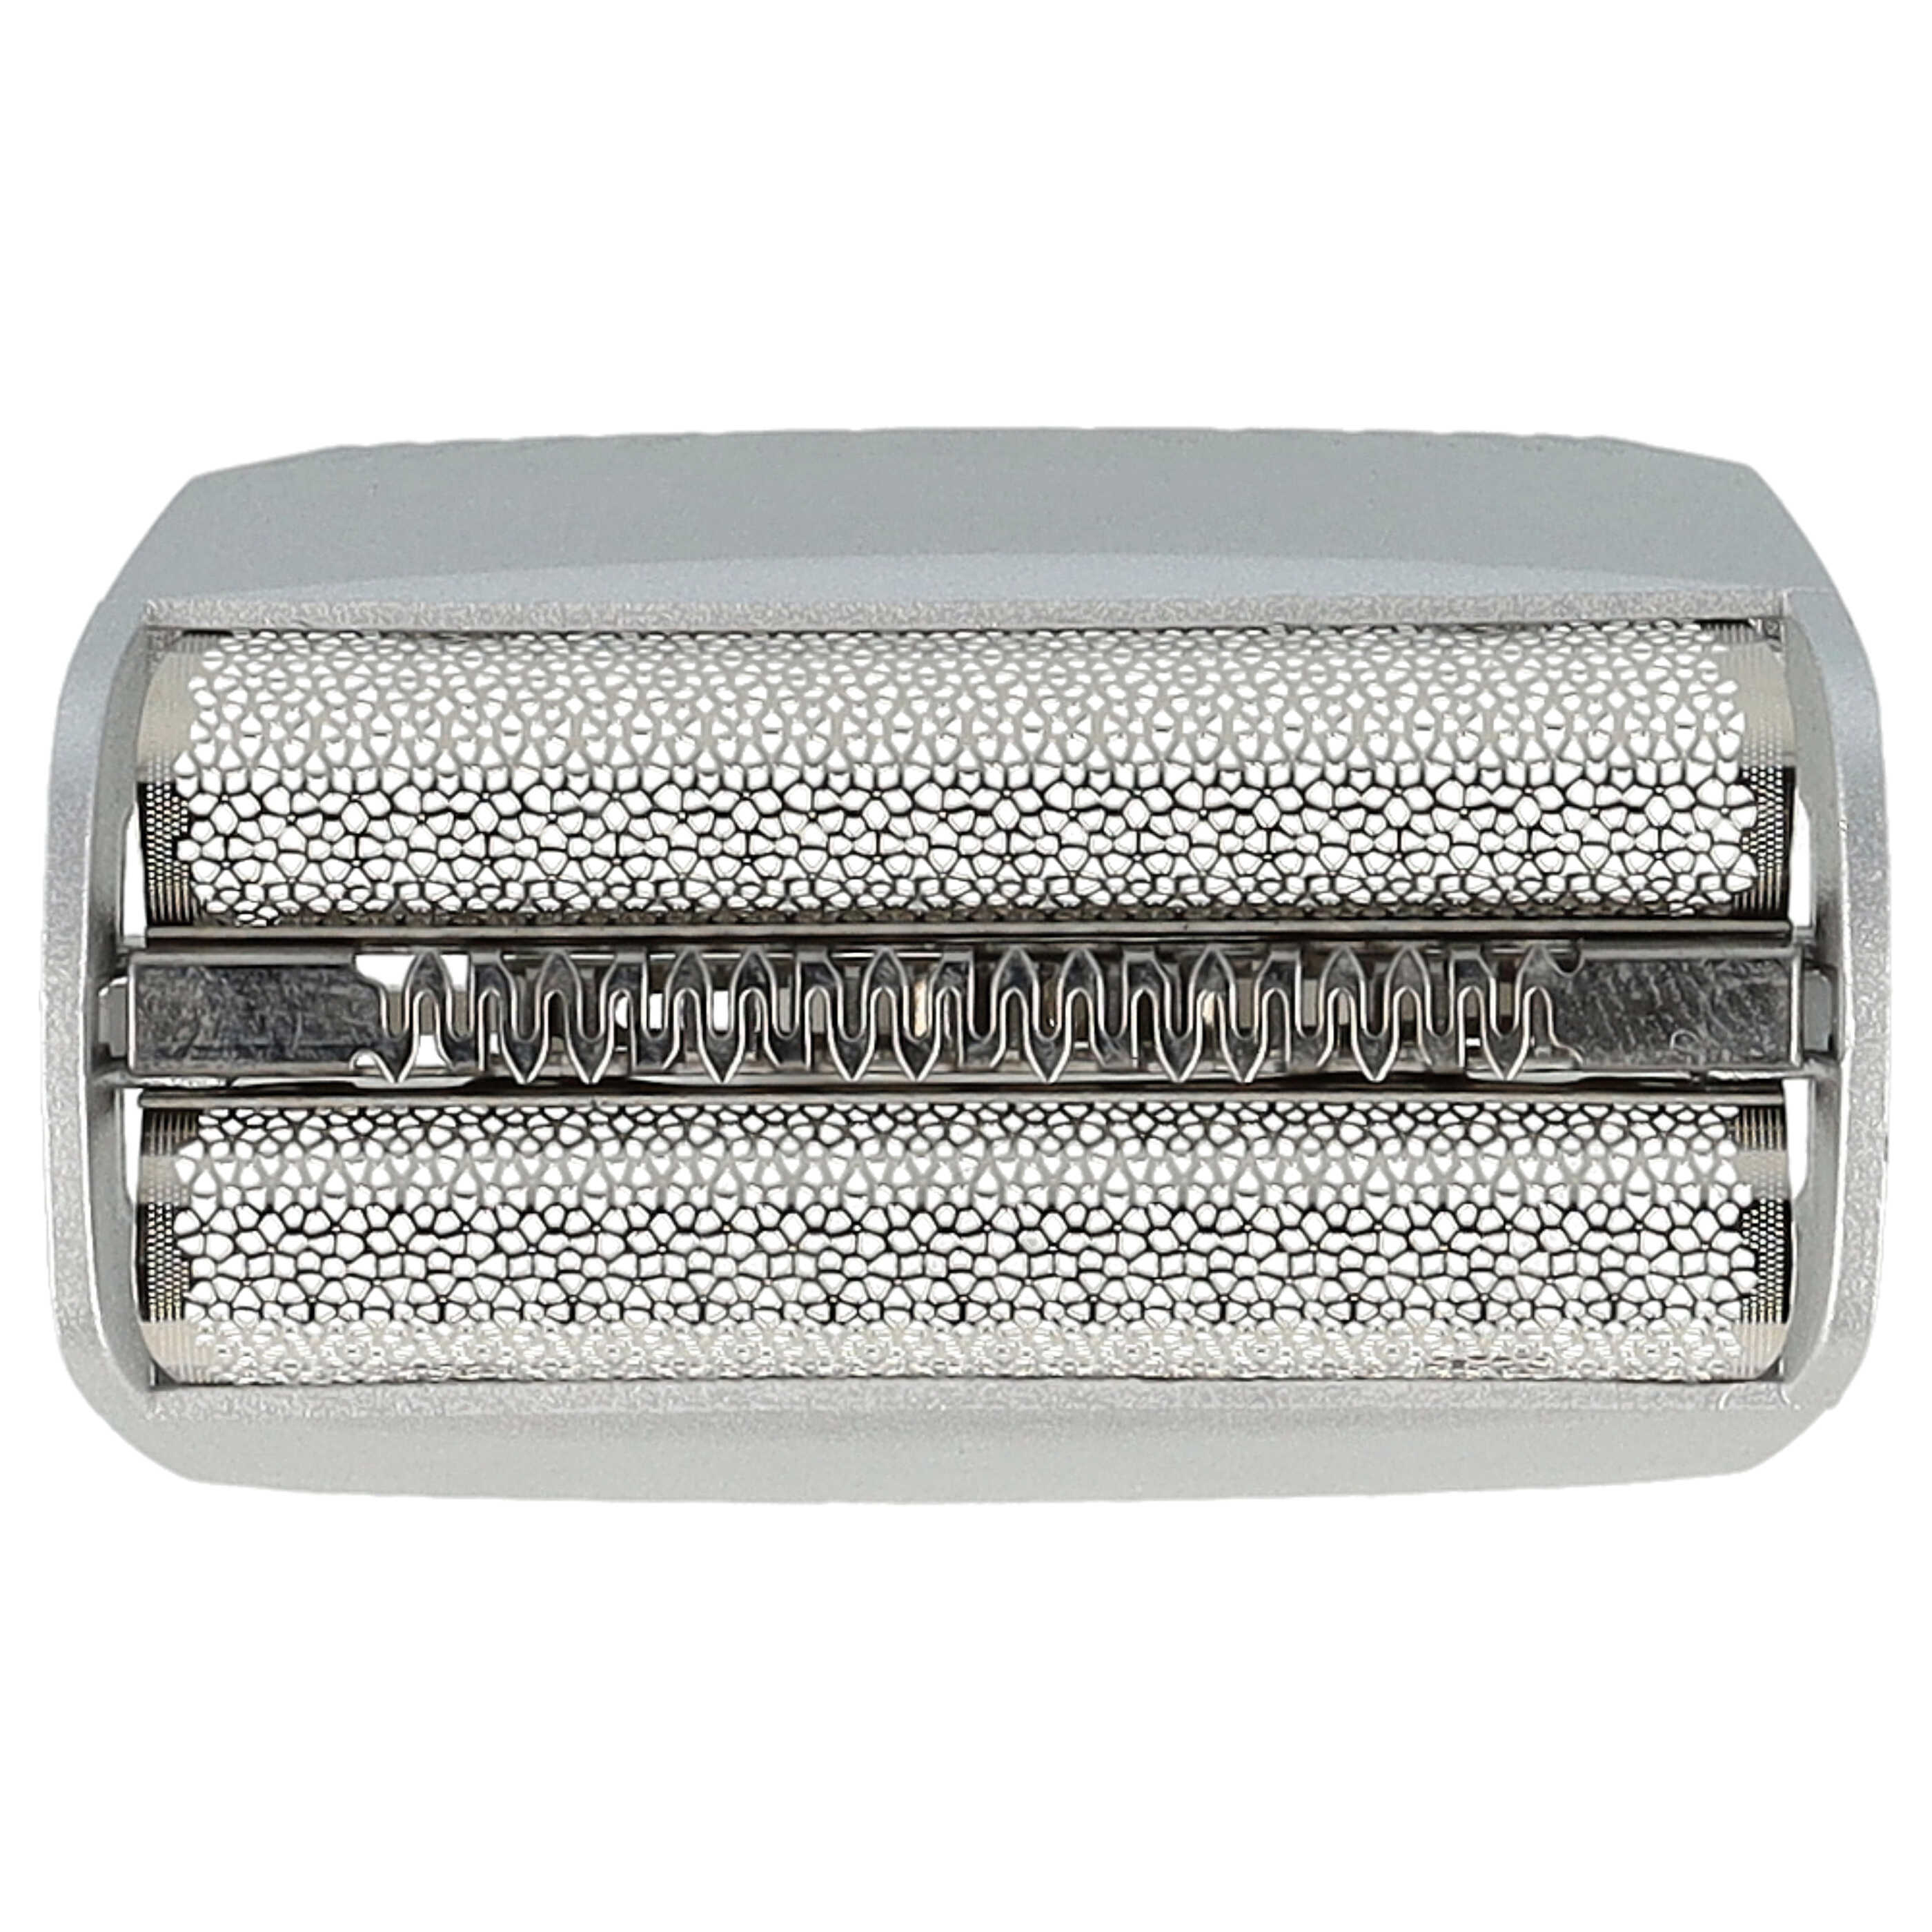 Doble hoja de corte reemplaza Braun 30B Mul, 30B, 30S para afeitadoras Braun - incl. marco, plata